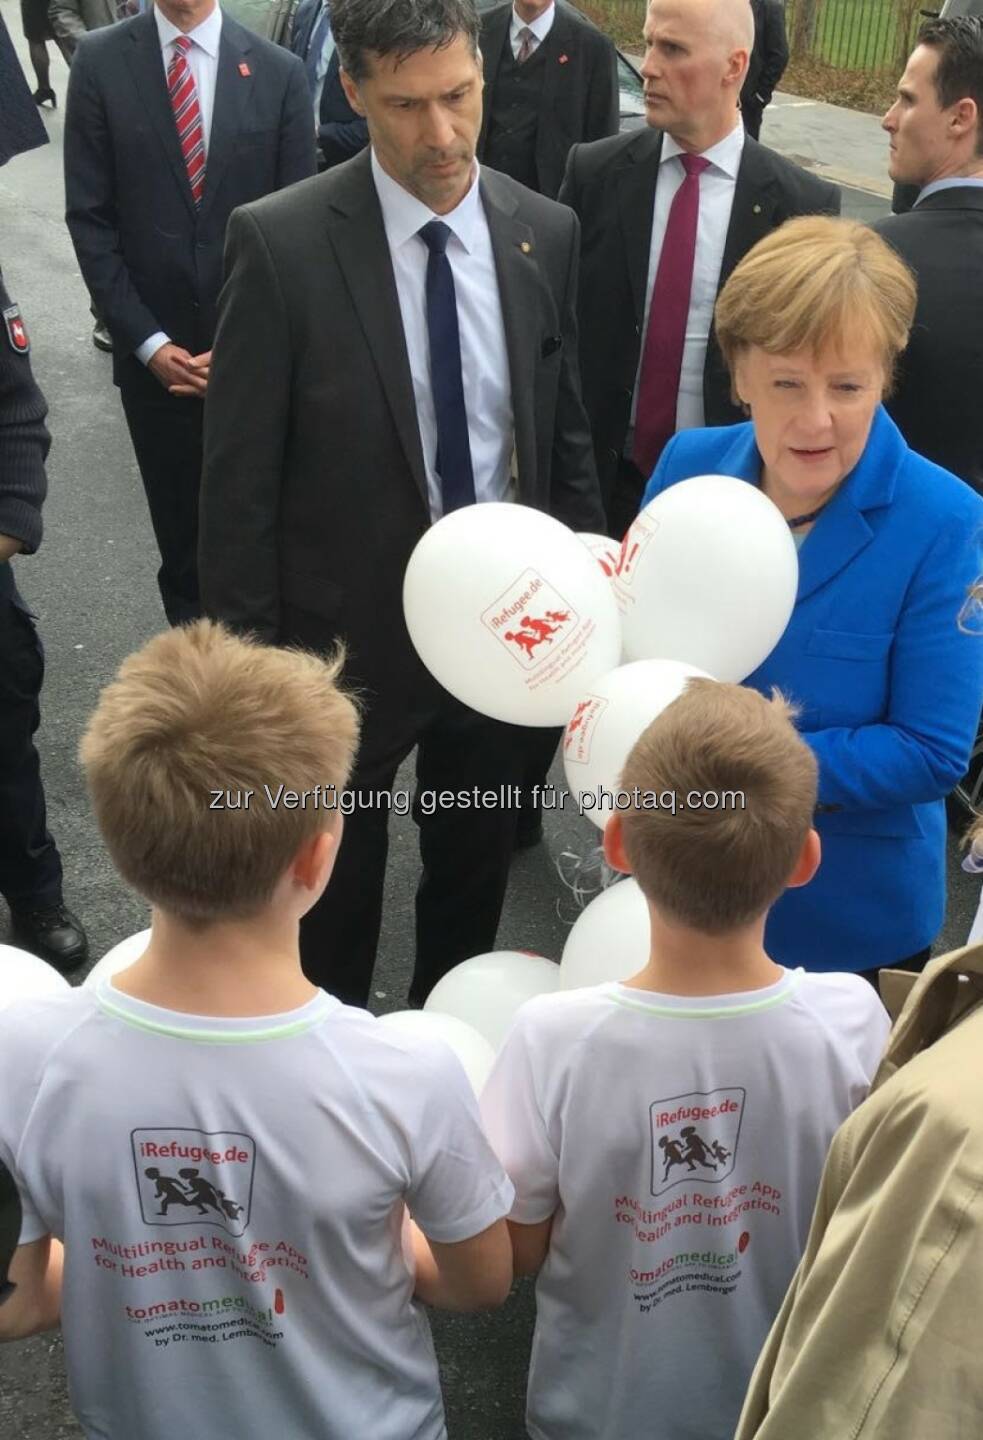 Angela Merkel : Cebit-Rundgang: Kanzlerin Merkel kriegt Luftballons geschenkt mit dem Logo der Flüchtlingsapp iRefugee.de und der Gesundheitsapp tomatomedical : Fotocredit: obs/tomatomedical international UG (haftungsbeschränkt)/Lemberger